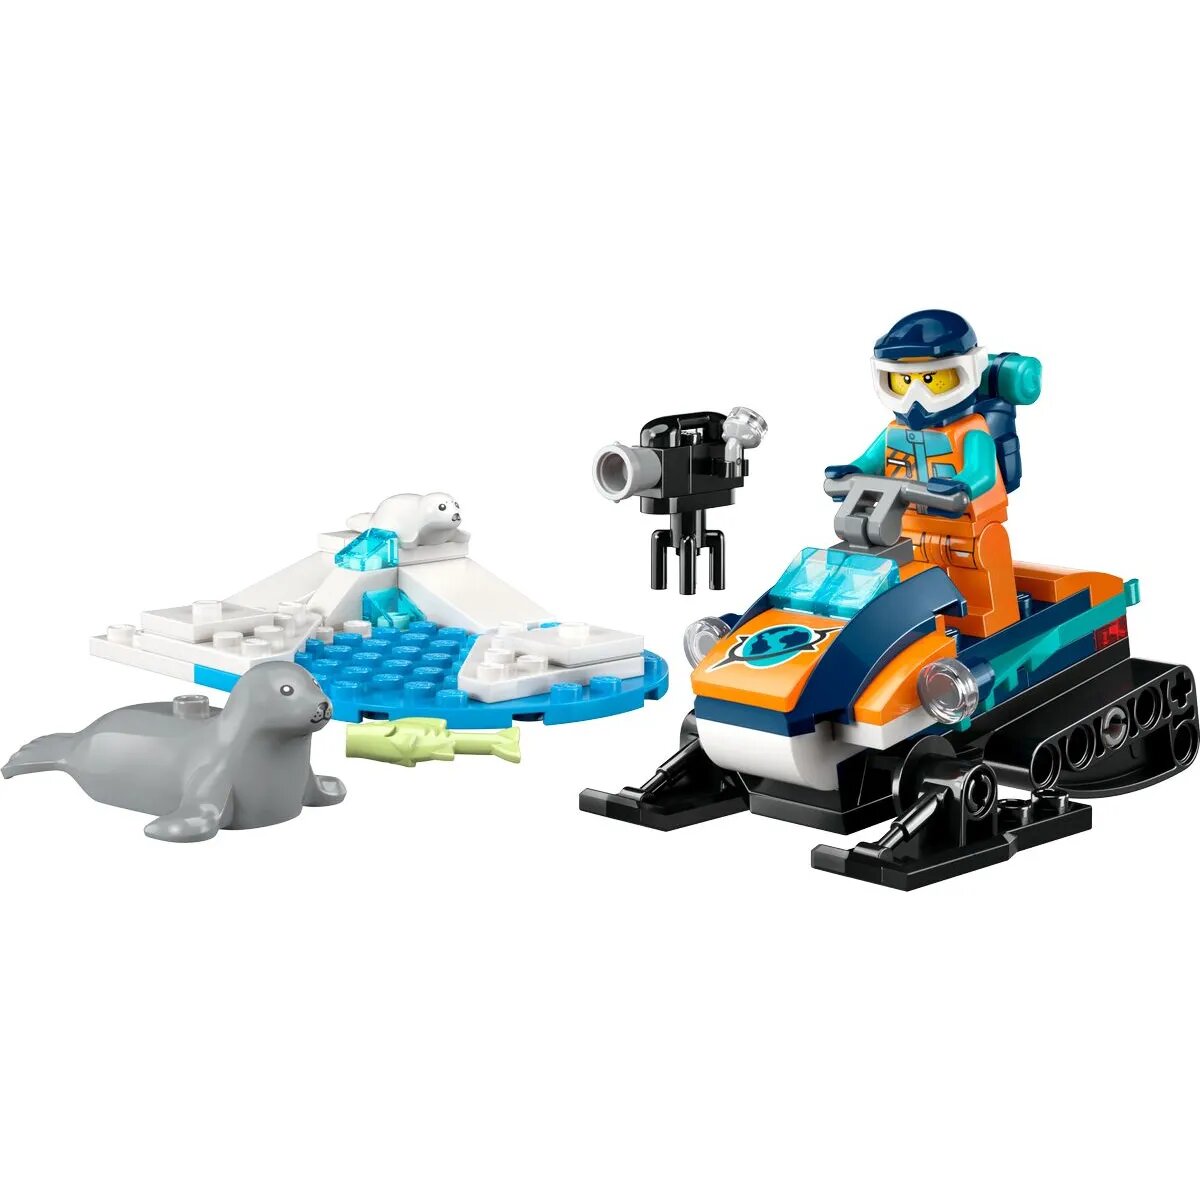 LEGO® City Exploration 60376 Arctic Snowmobile